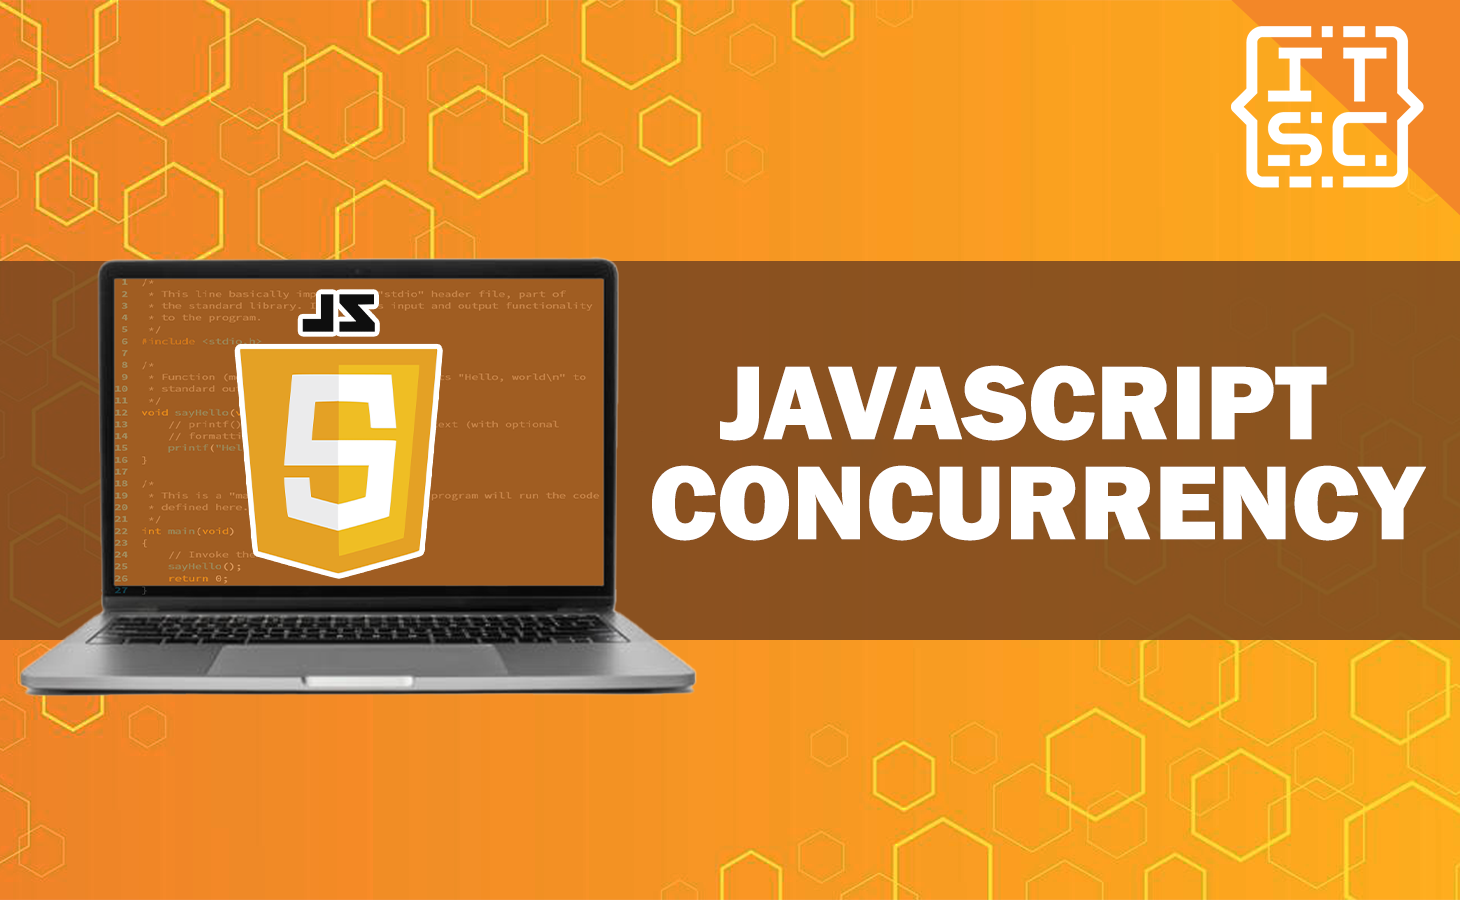 Exploring Concurrency in JavaScript